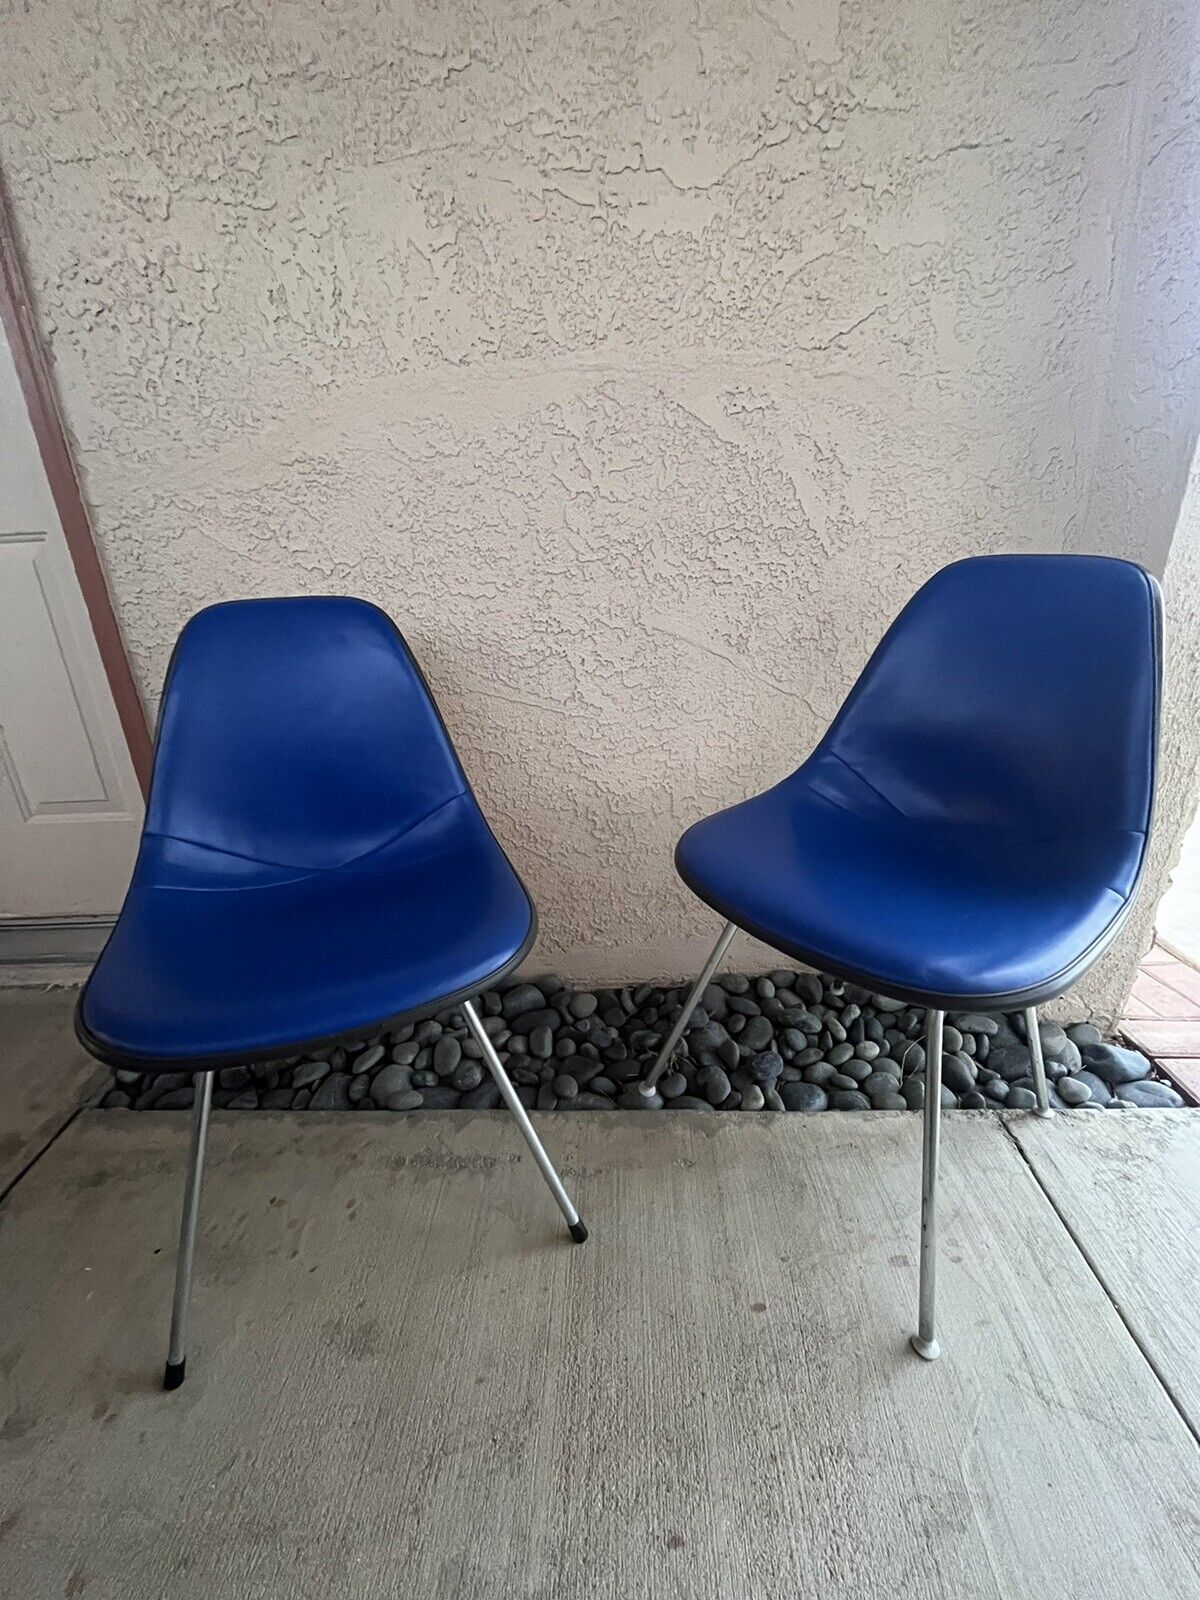 1970s Vintage Mid Century Modern Herman Miller Blue Chairs SET OF 2